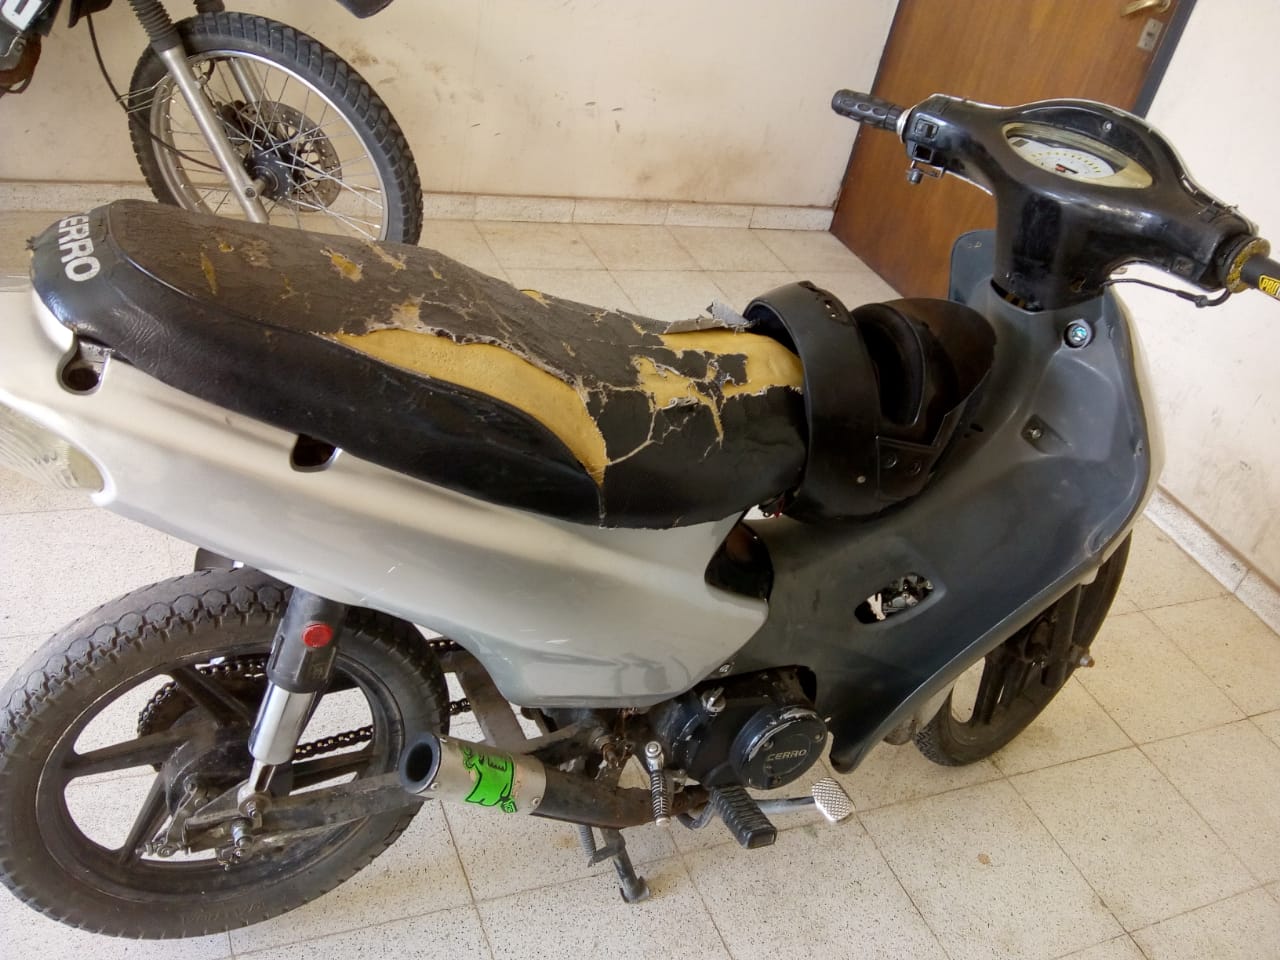 En menos de 24 horas, recuperaron una motocicleta robada durante un asalto.